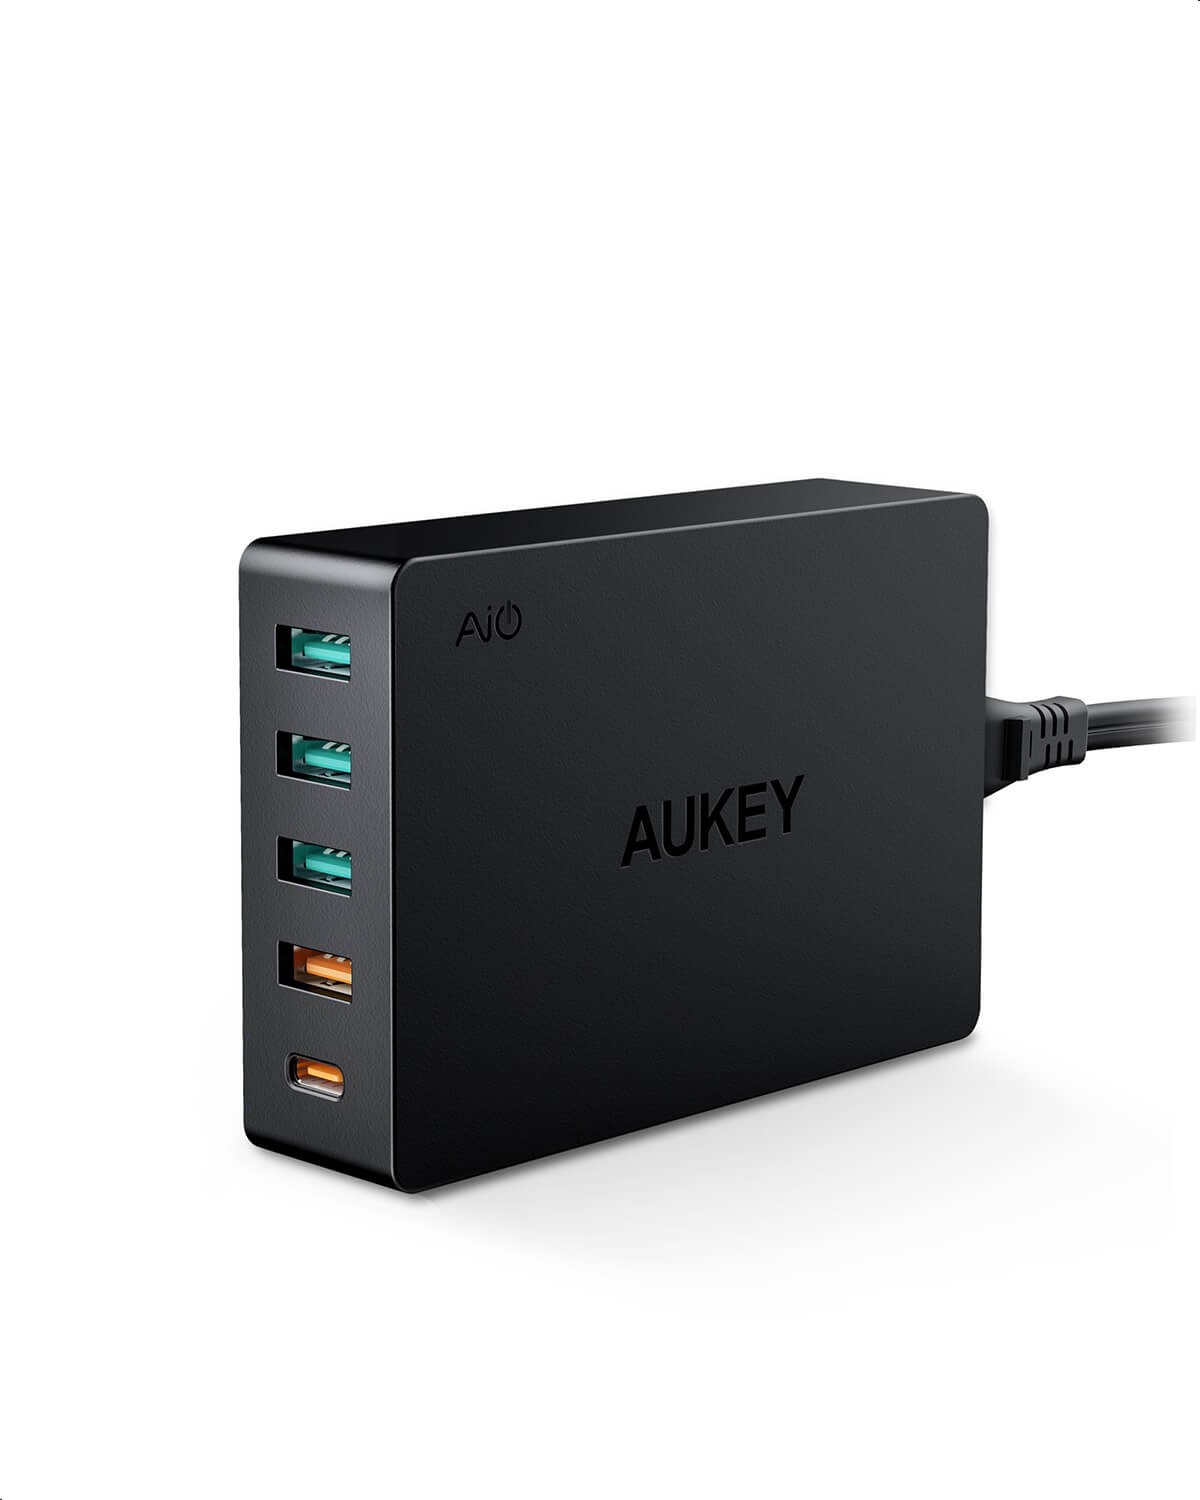 AUKEY、USB x 4・USB-C x 1（PD3.0）の合計5ポート搭載の充電器「PA-Y23」Amazonで20%オフセールの3,119円